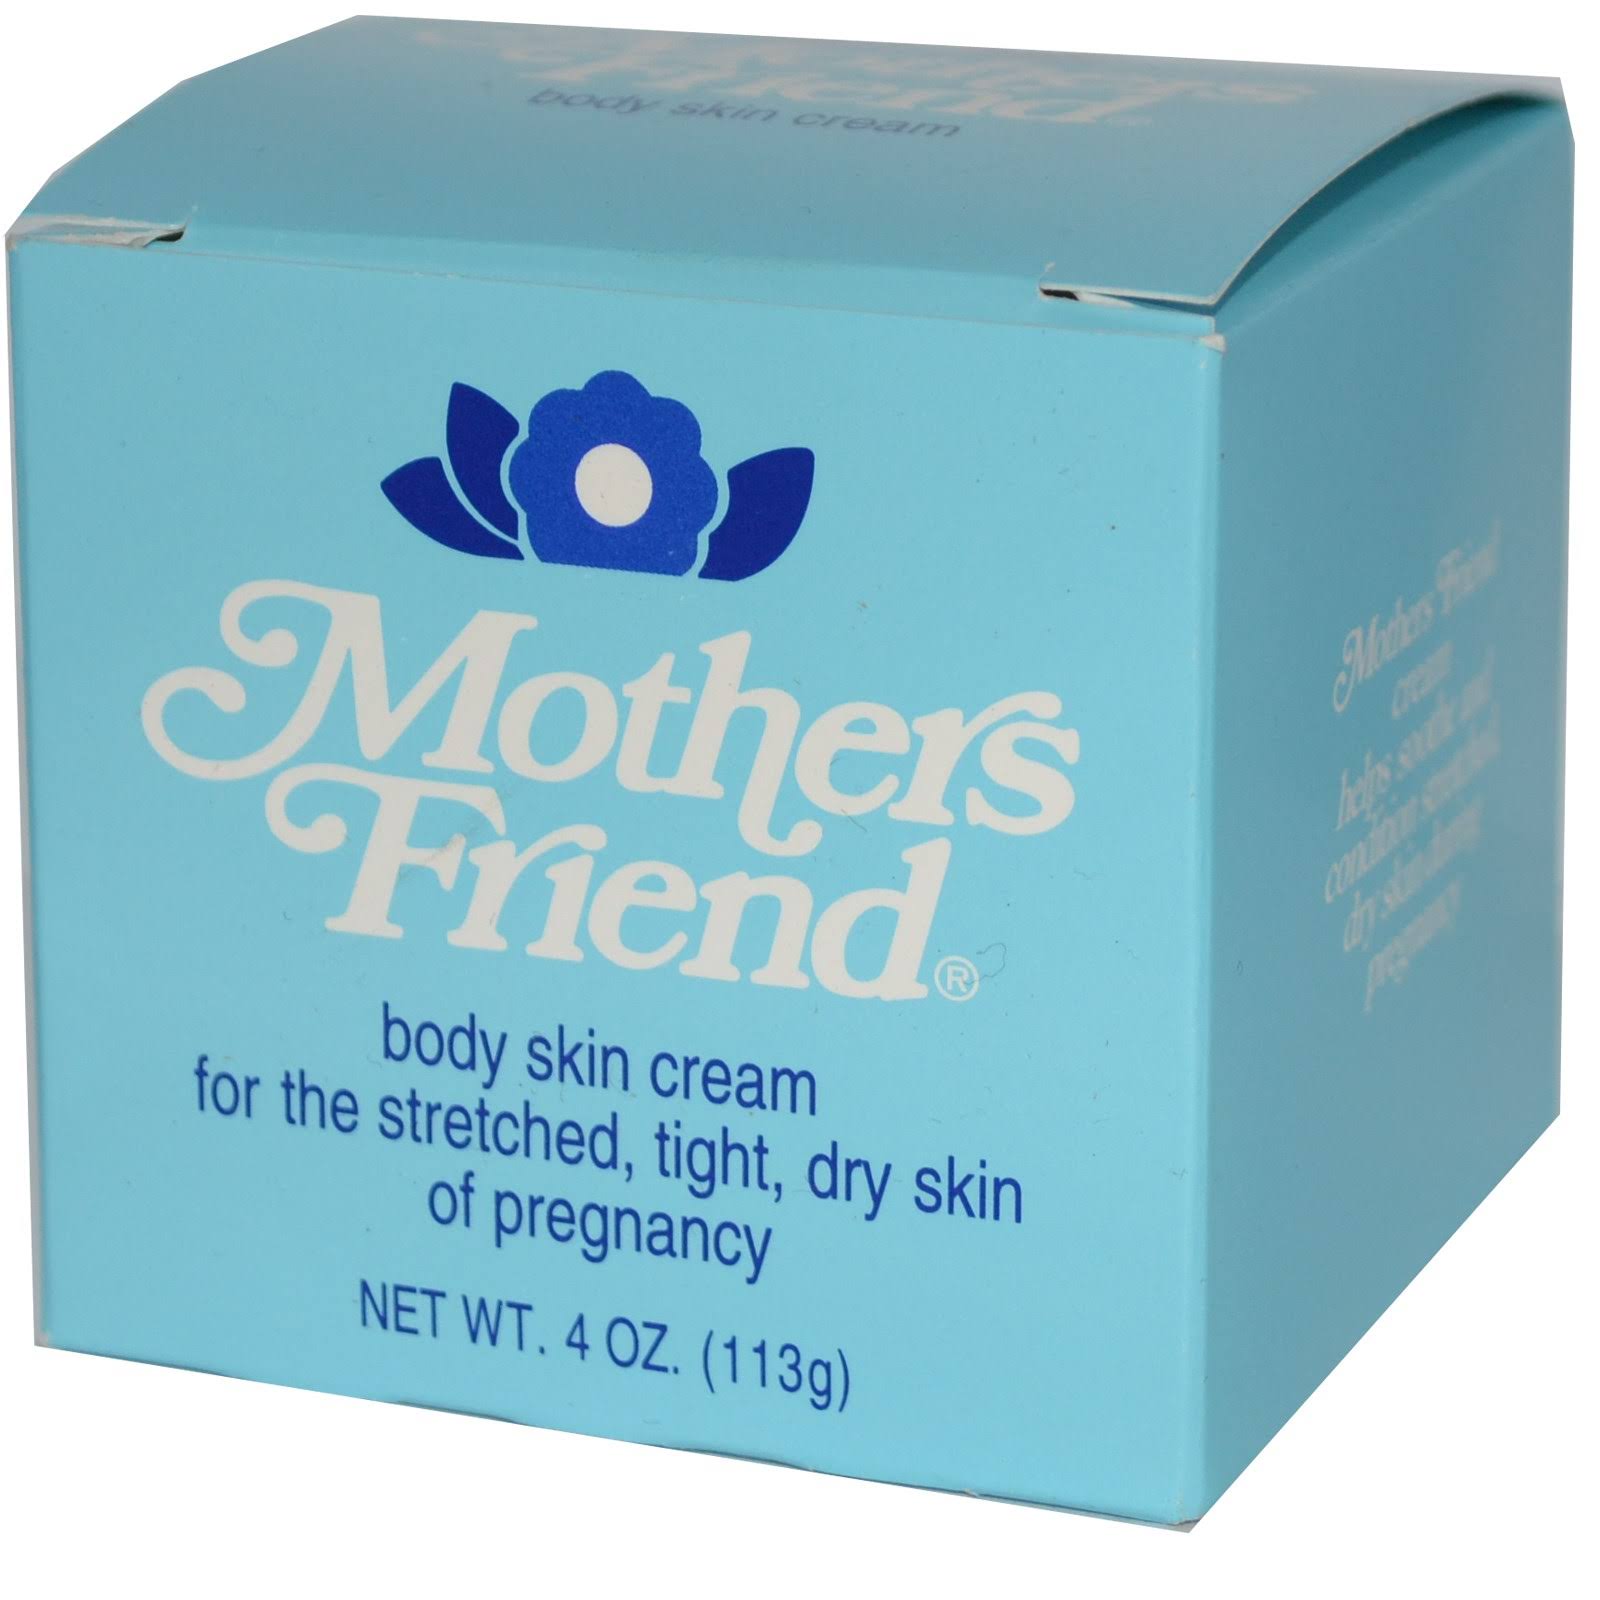 Mothers Friend Body Skin Cream - 4oz